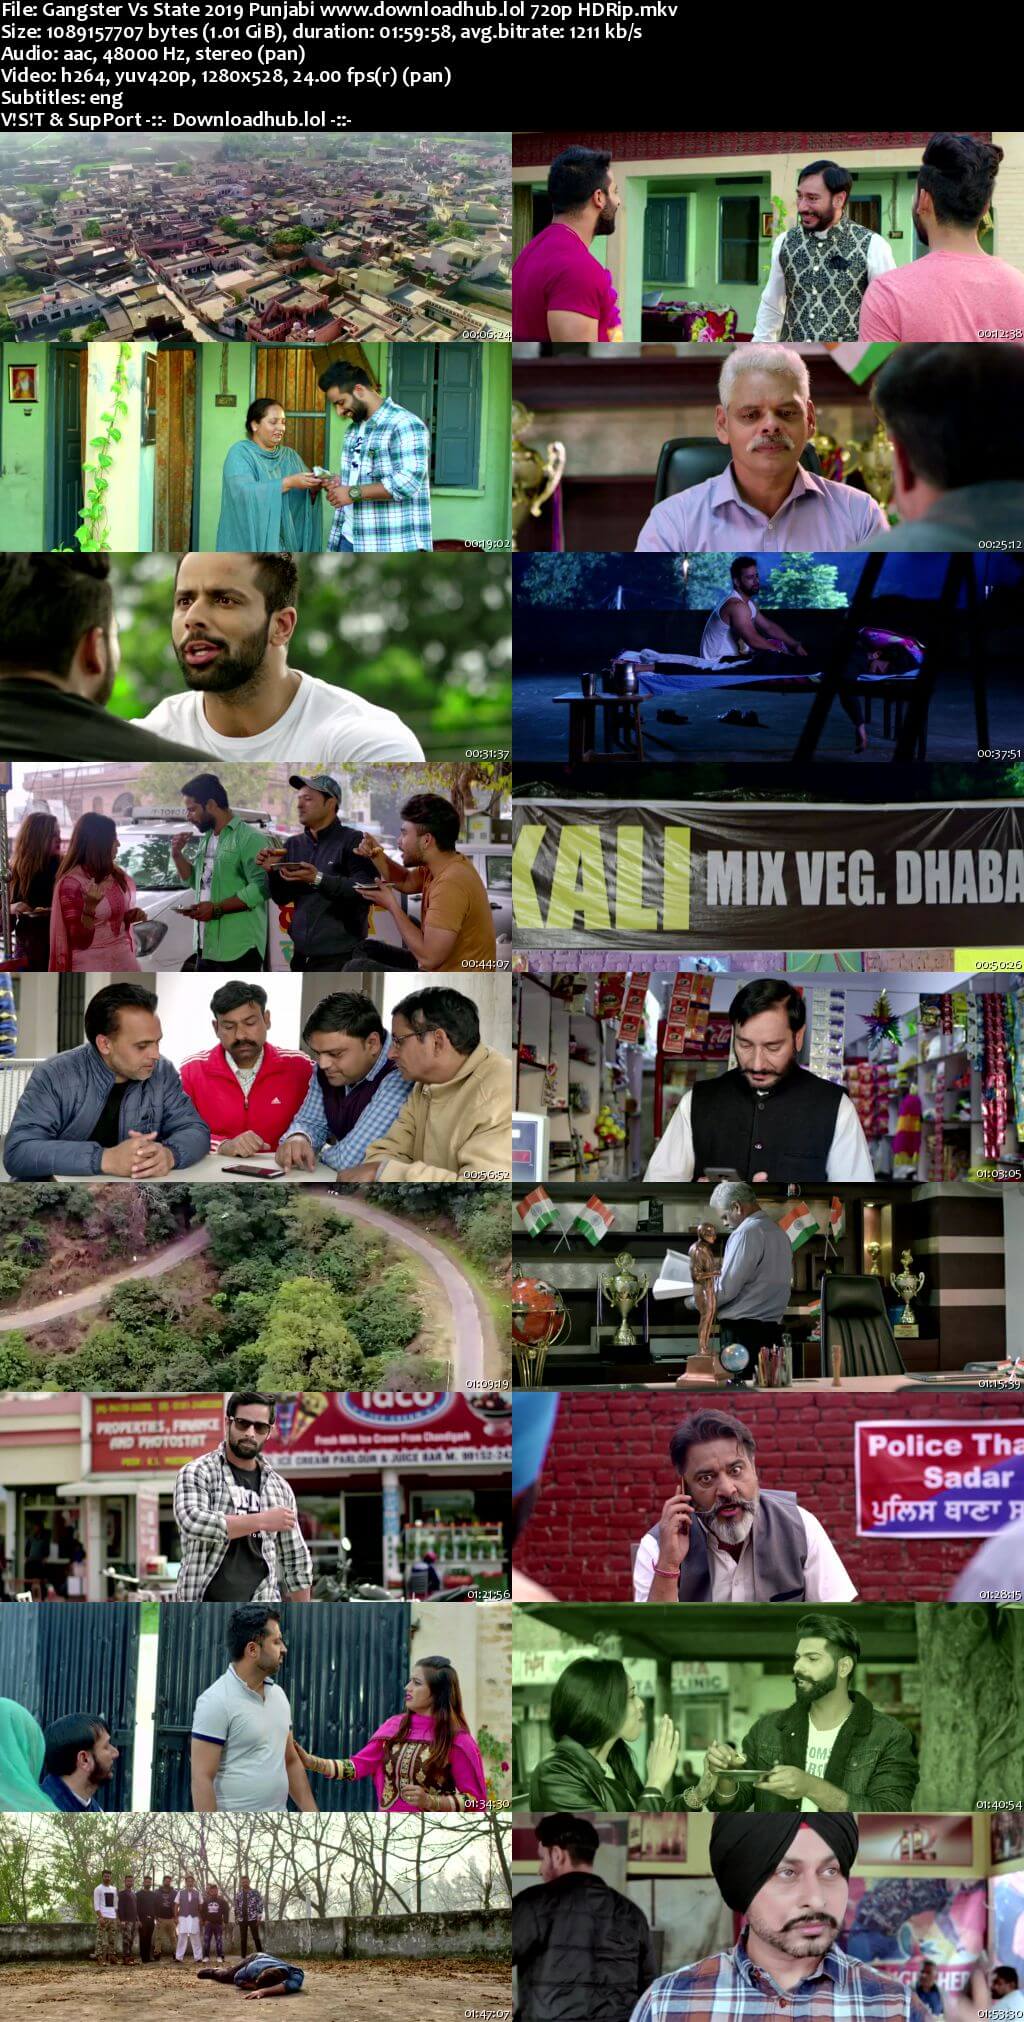 Gangster Vs State 2019 Punjabi 720p HDRip ESubs